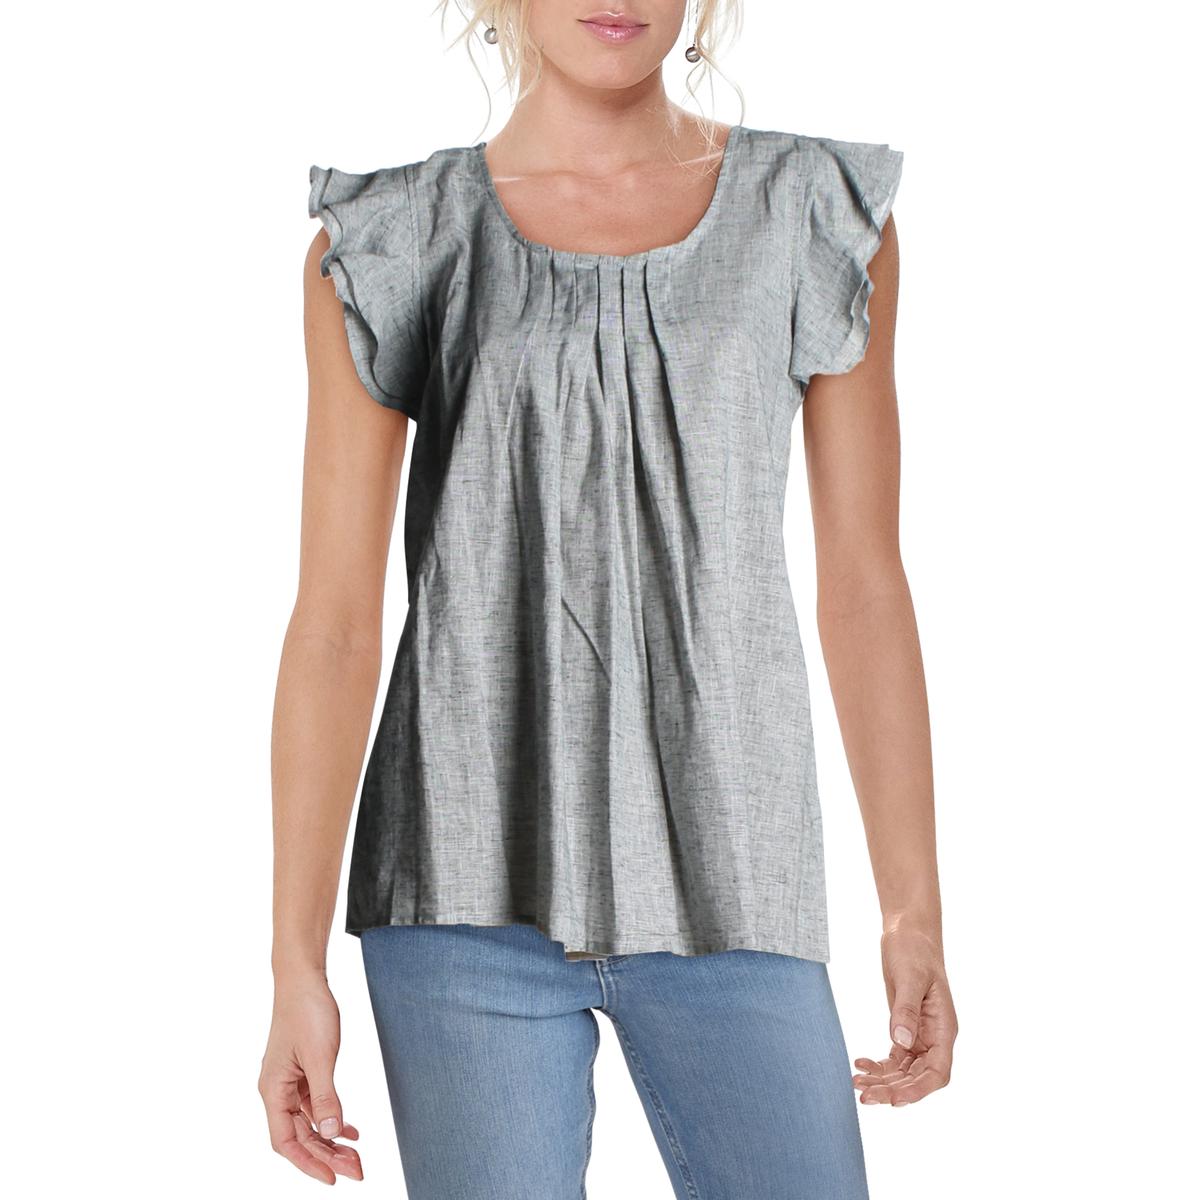 Cupio Blush Womens Pleated Ruffle Sleeves Blouse Top Shirt BHFO 5193 | eBay